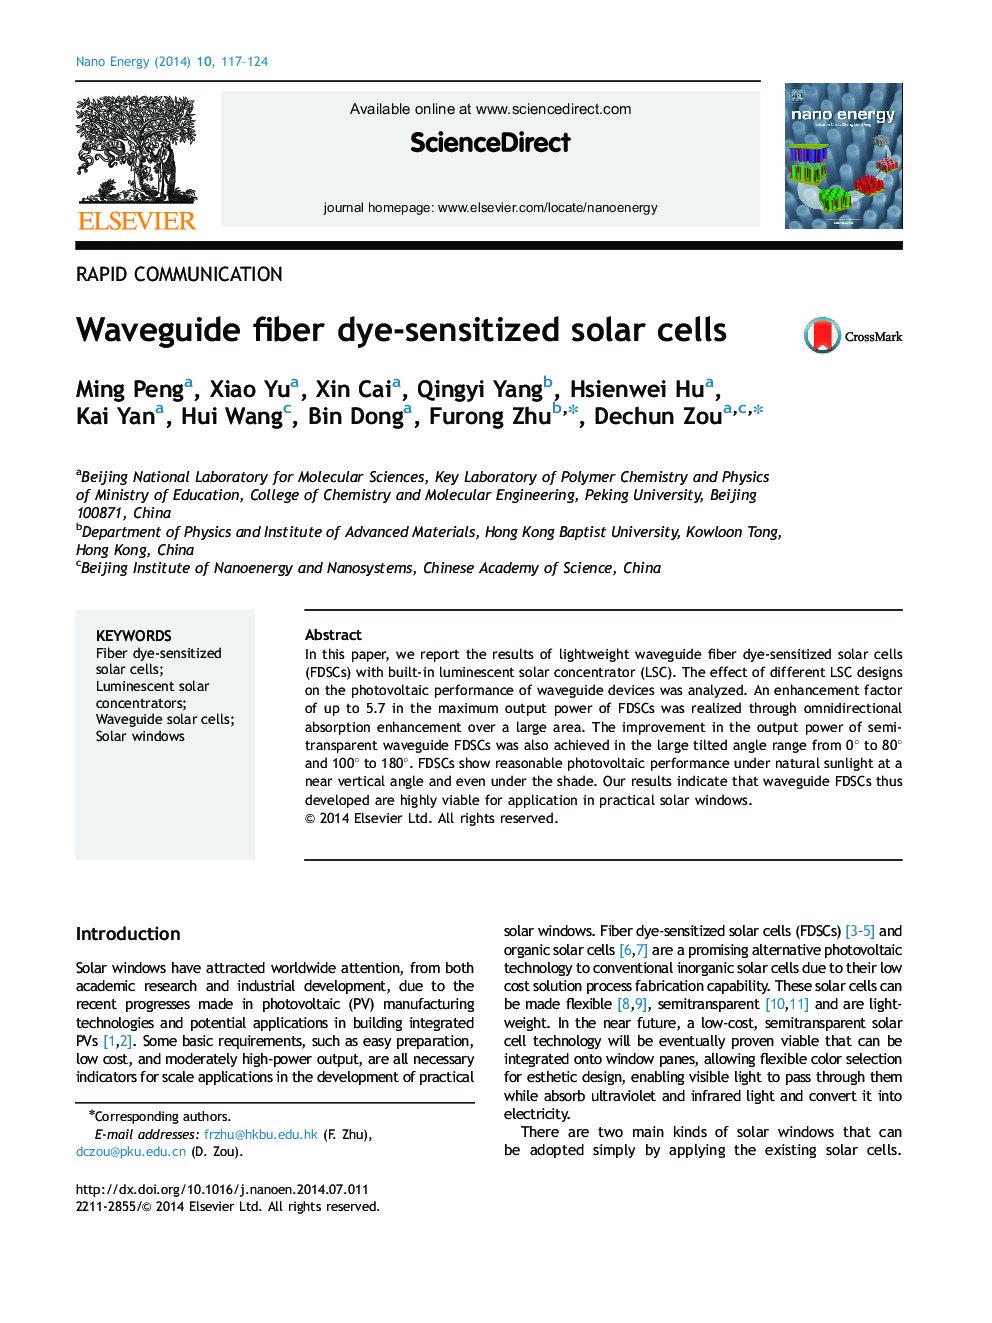 Waveguide fiber dye-sensitized solar cells